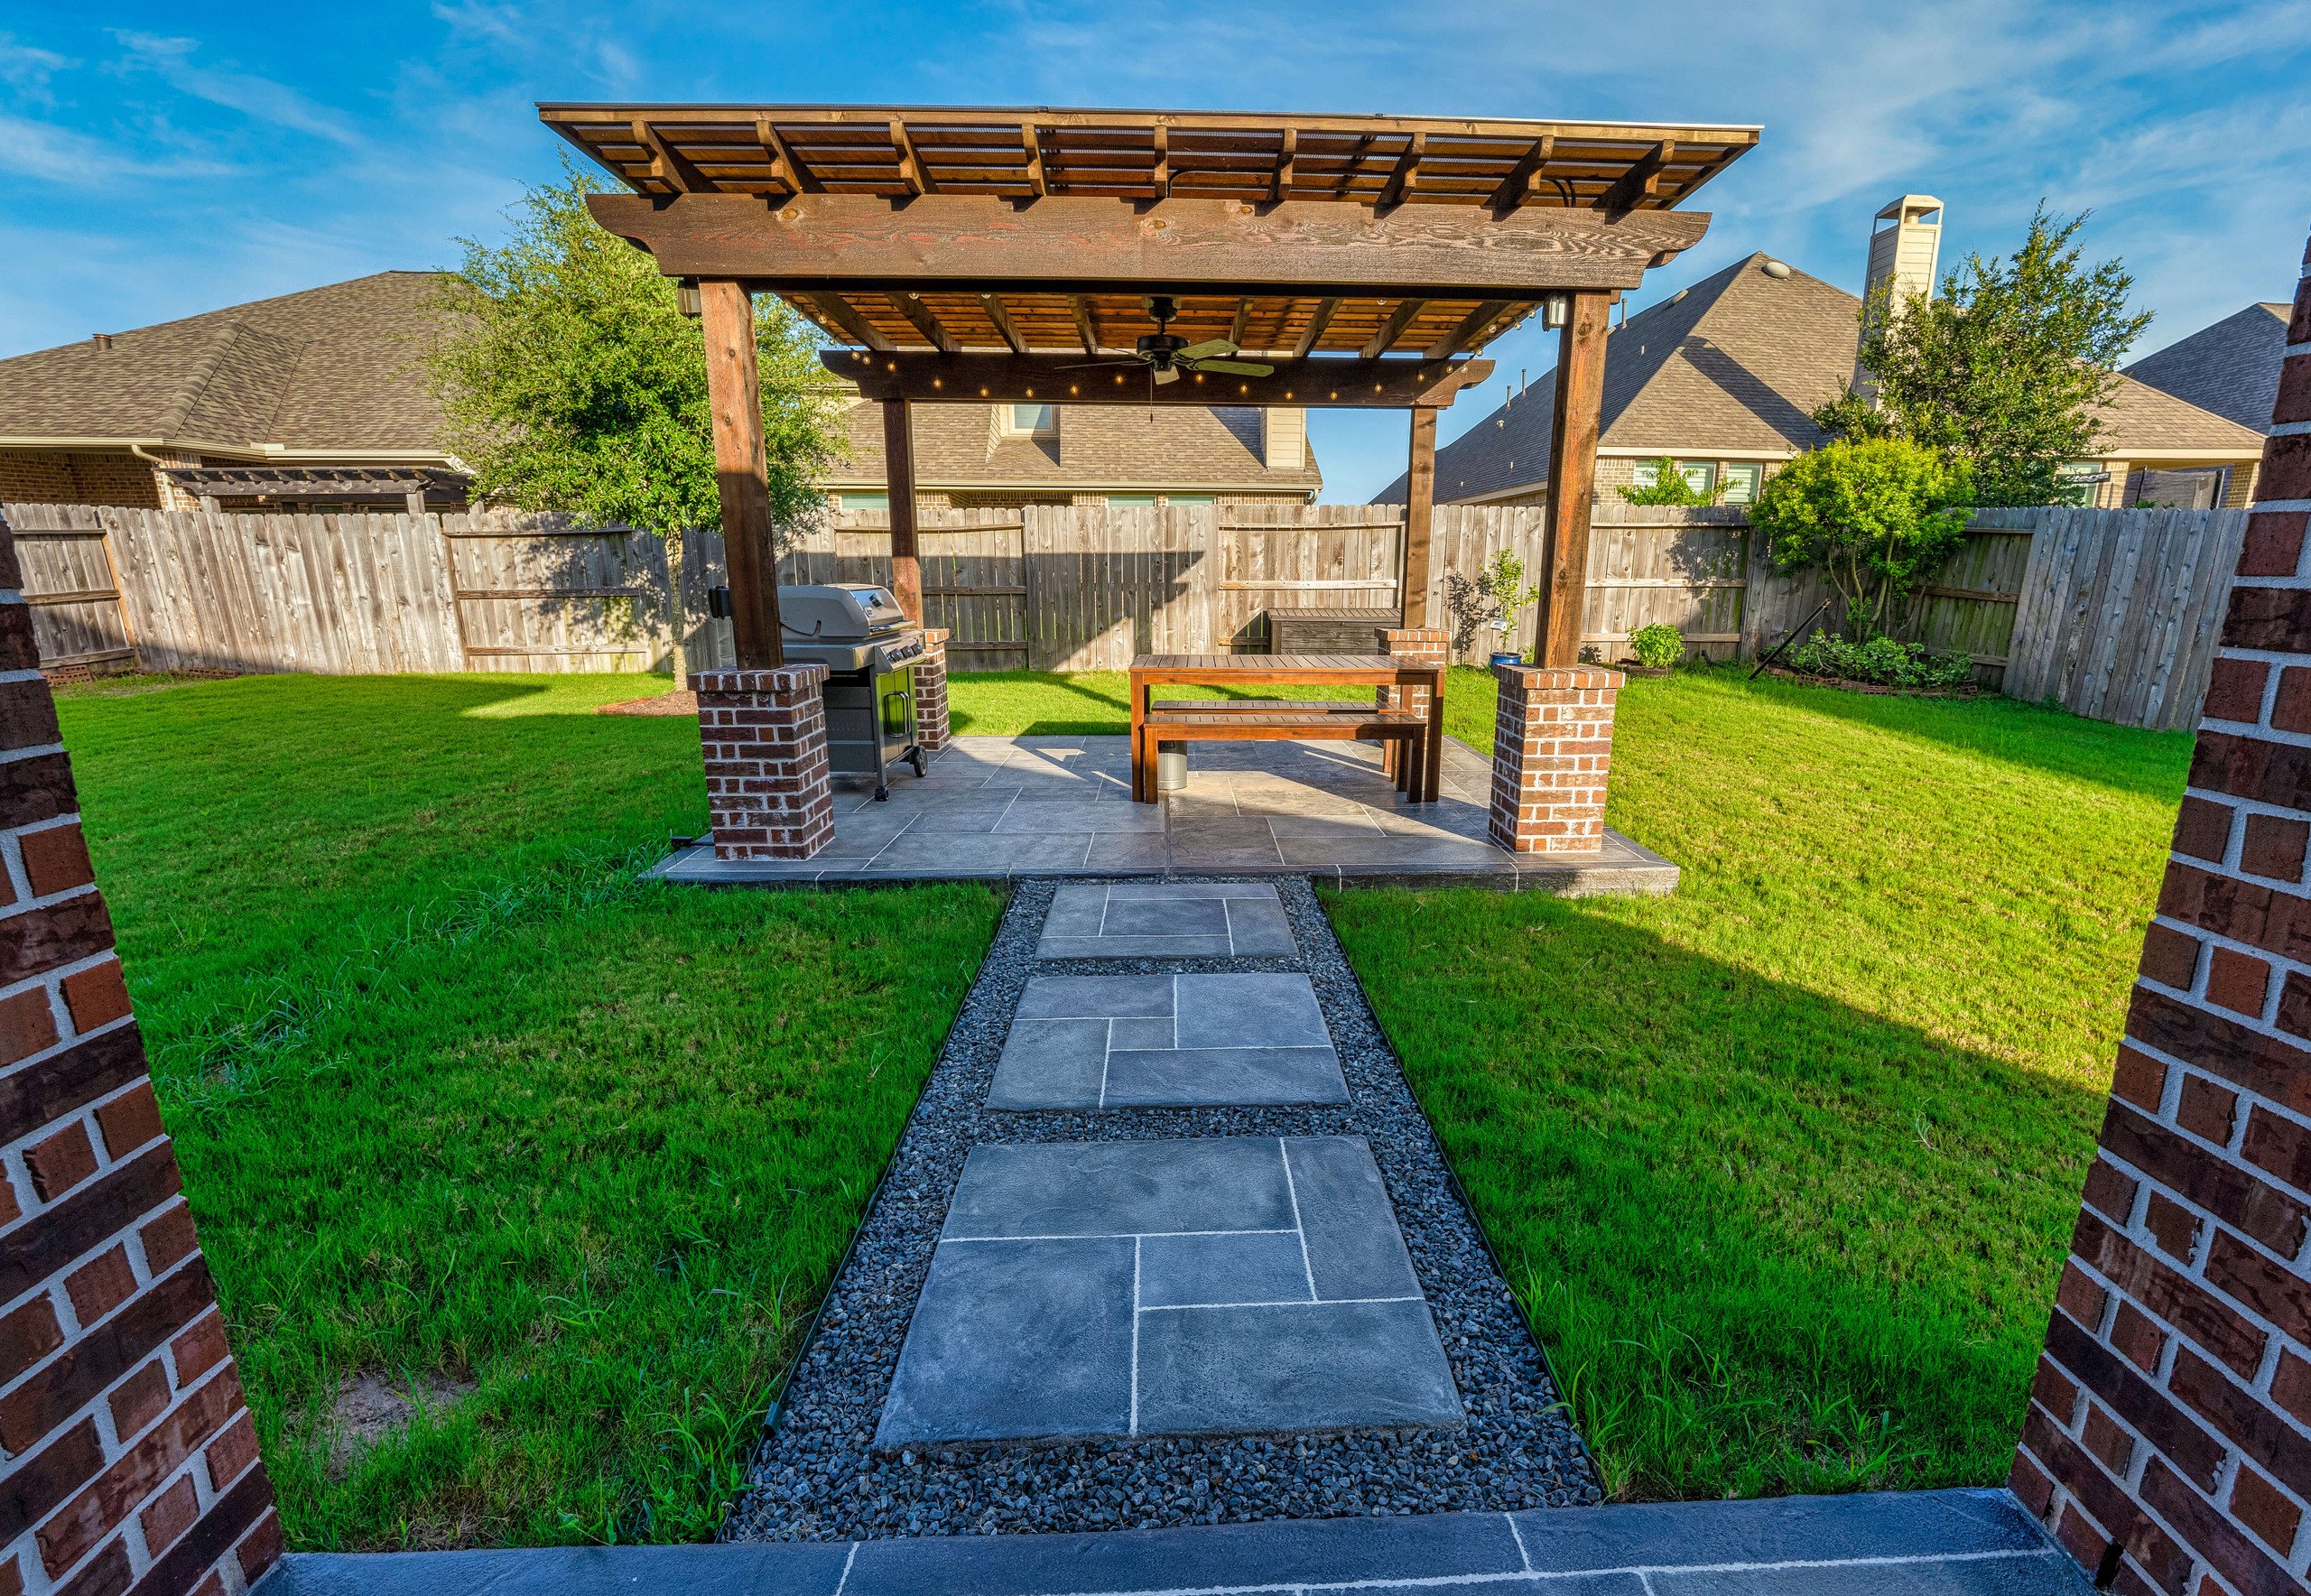 Carvestone design with pergola and patio overlay in Houston Texas